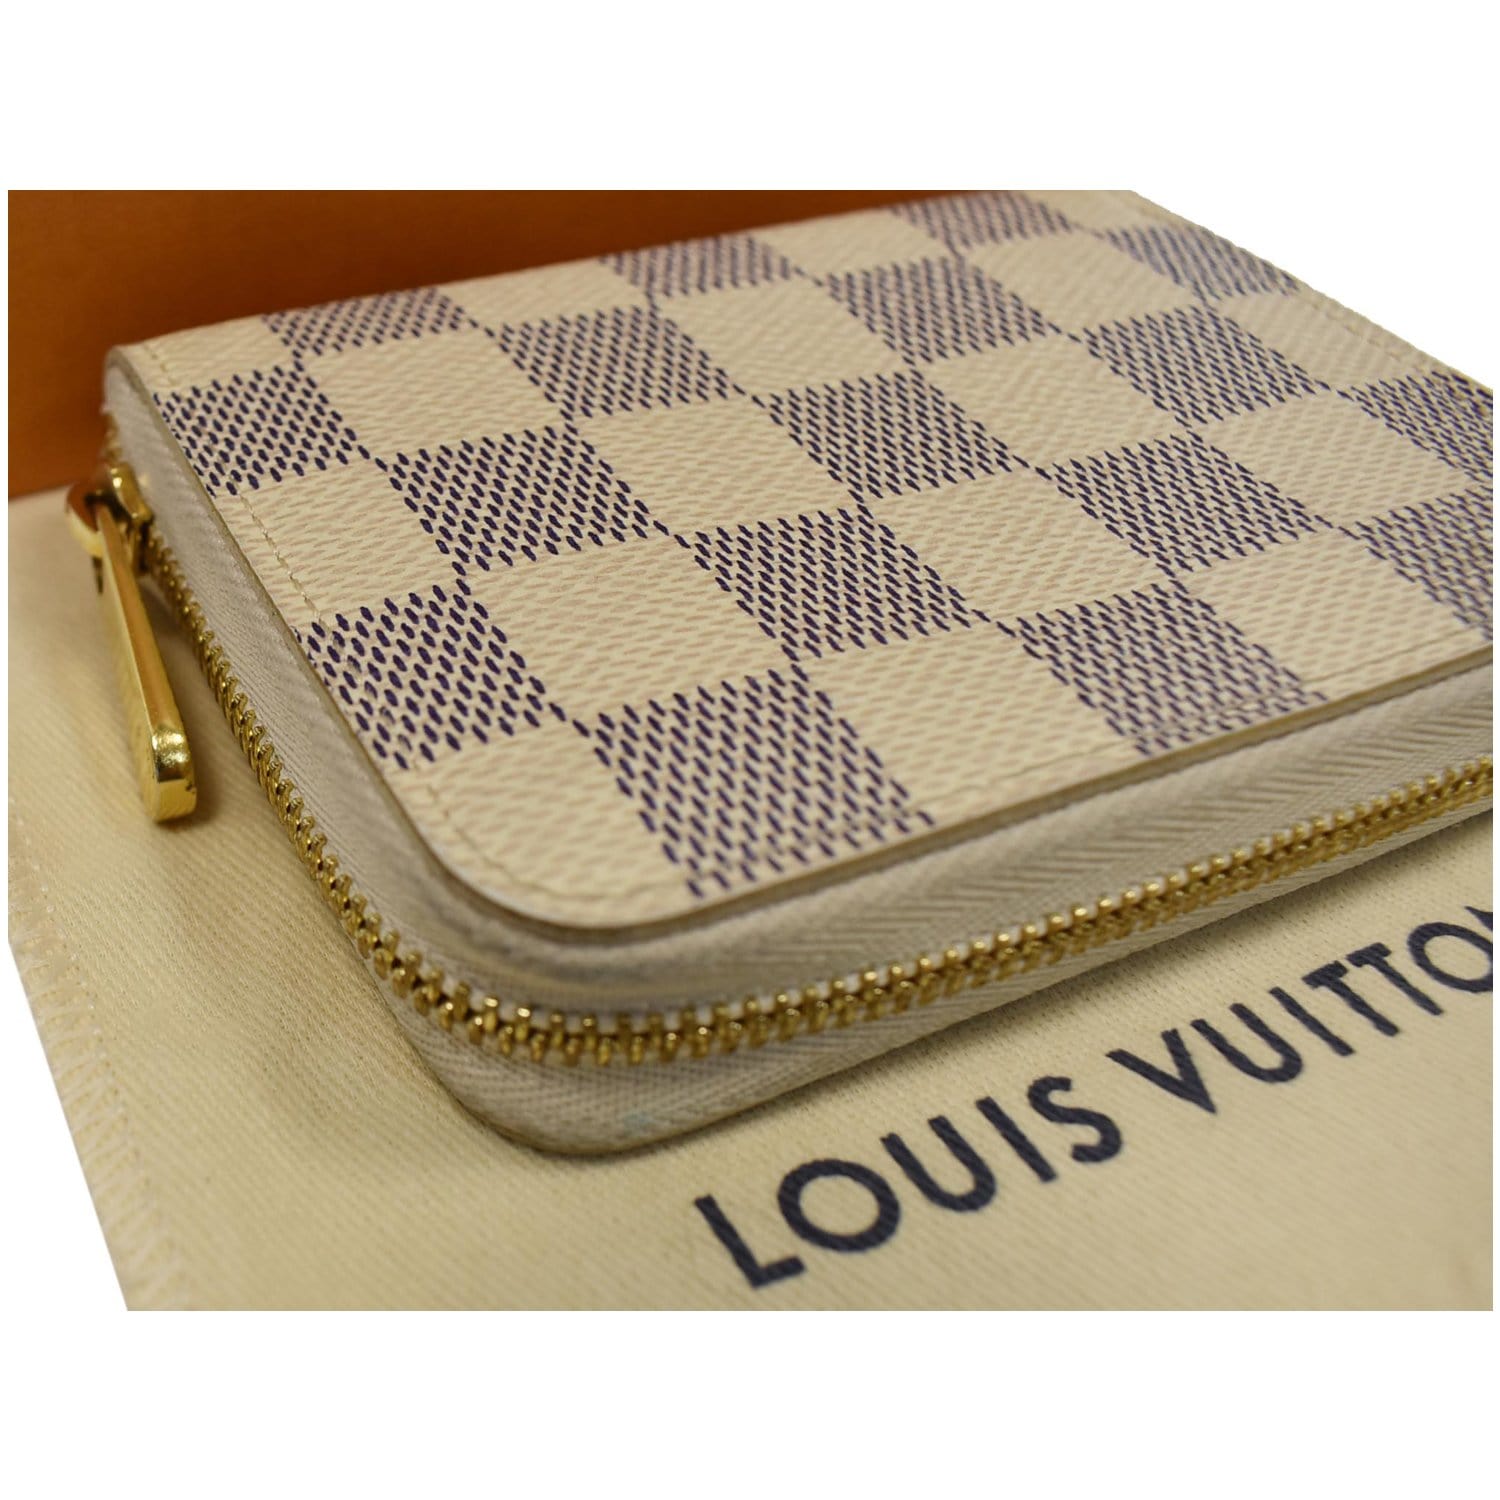 Louis-Vuitton-Damier-Azur-White-Checkered-Purse-Suede-Top-1 - Dash